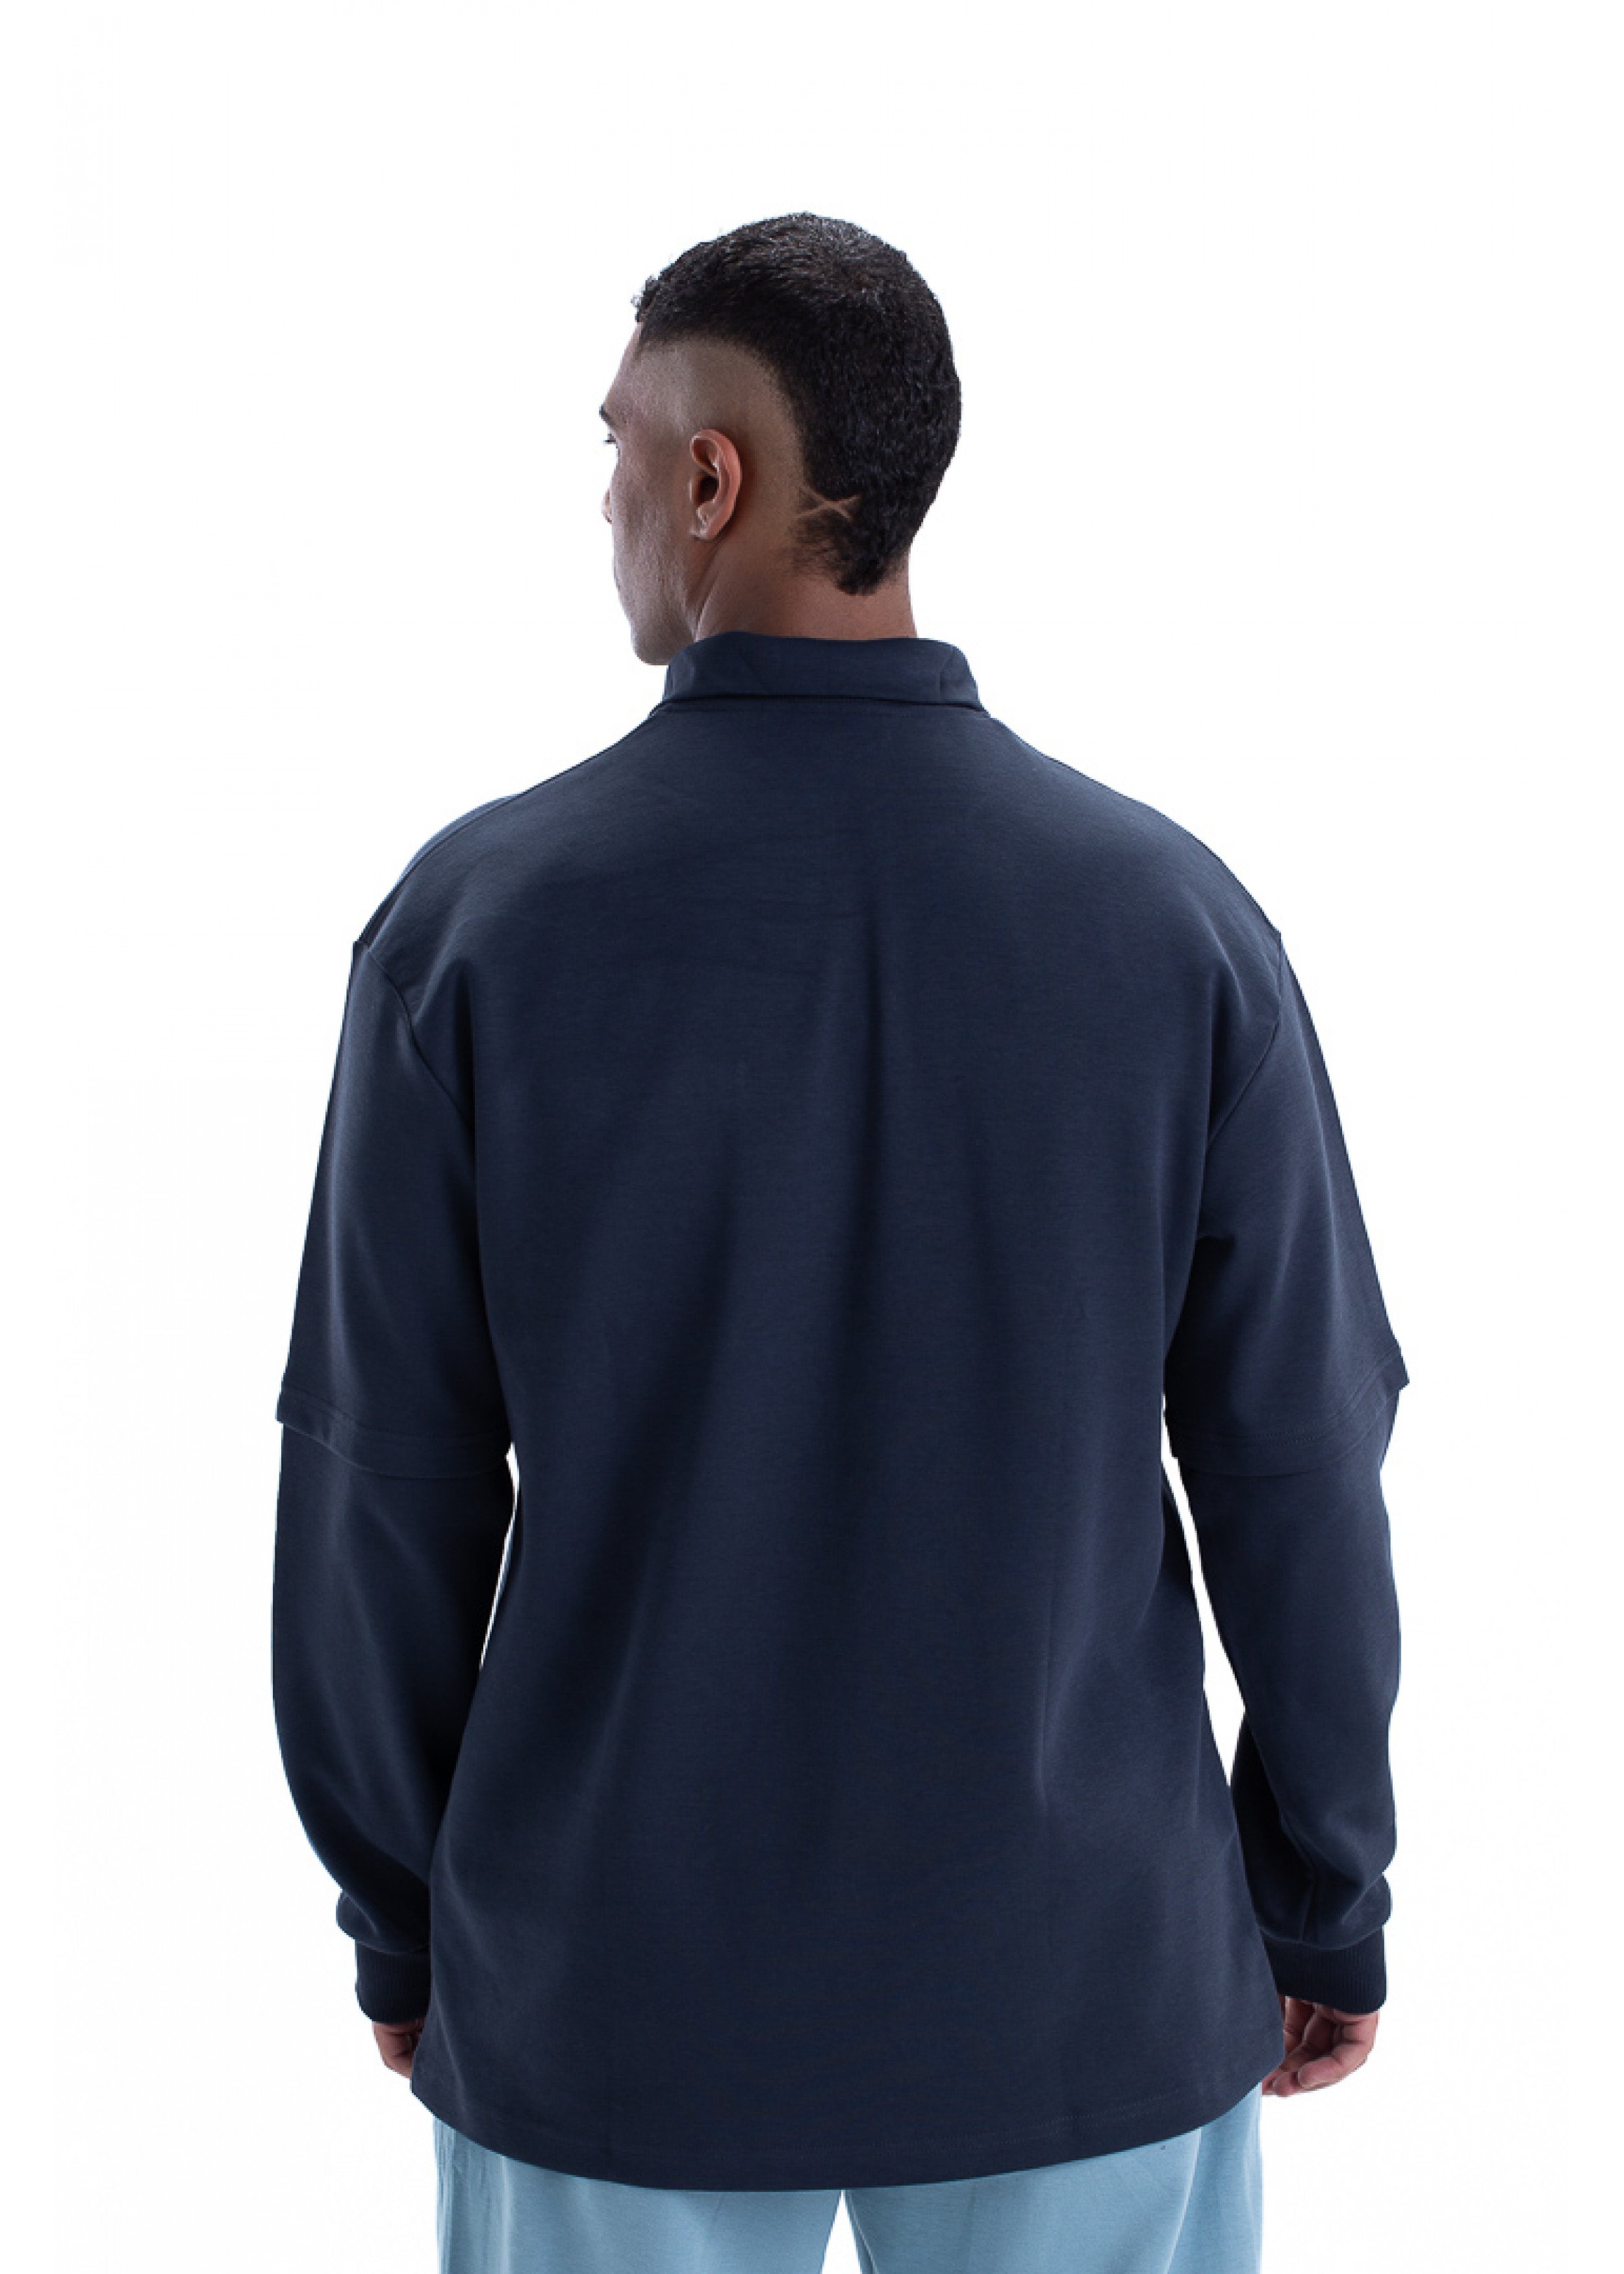 weaver sweatshirt oversize - gray